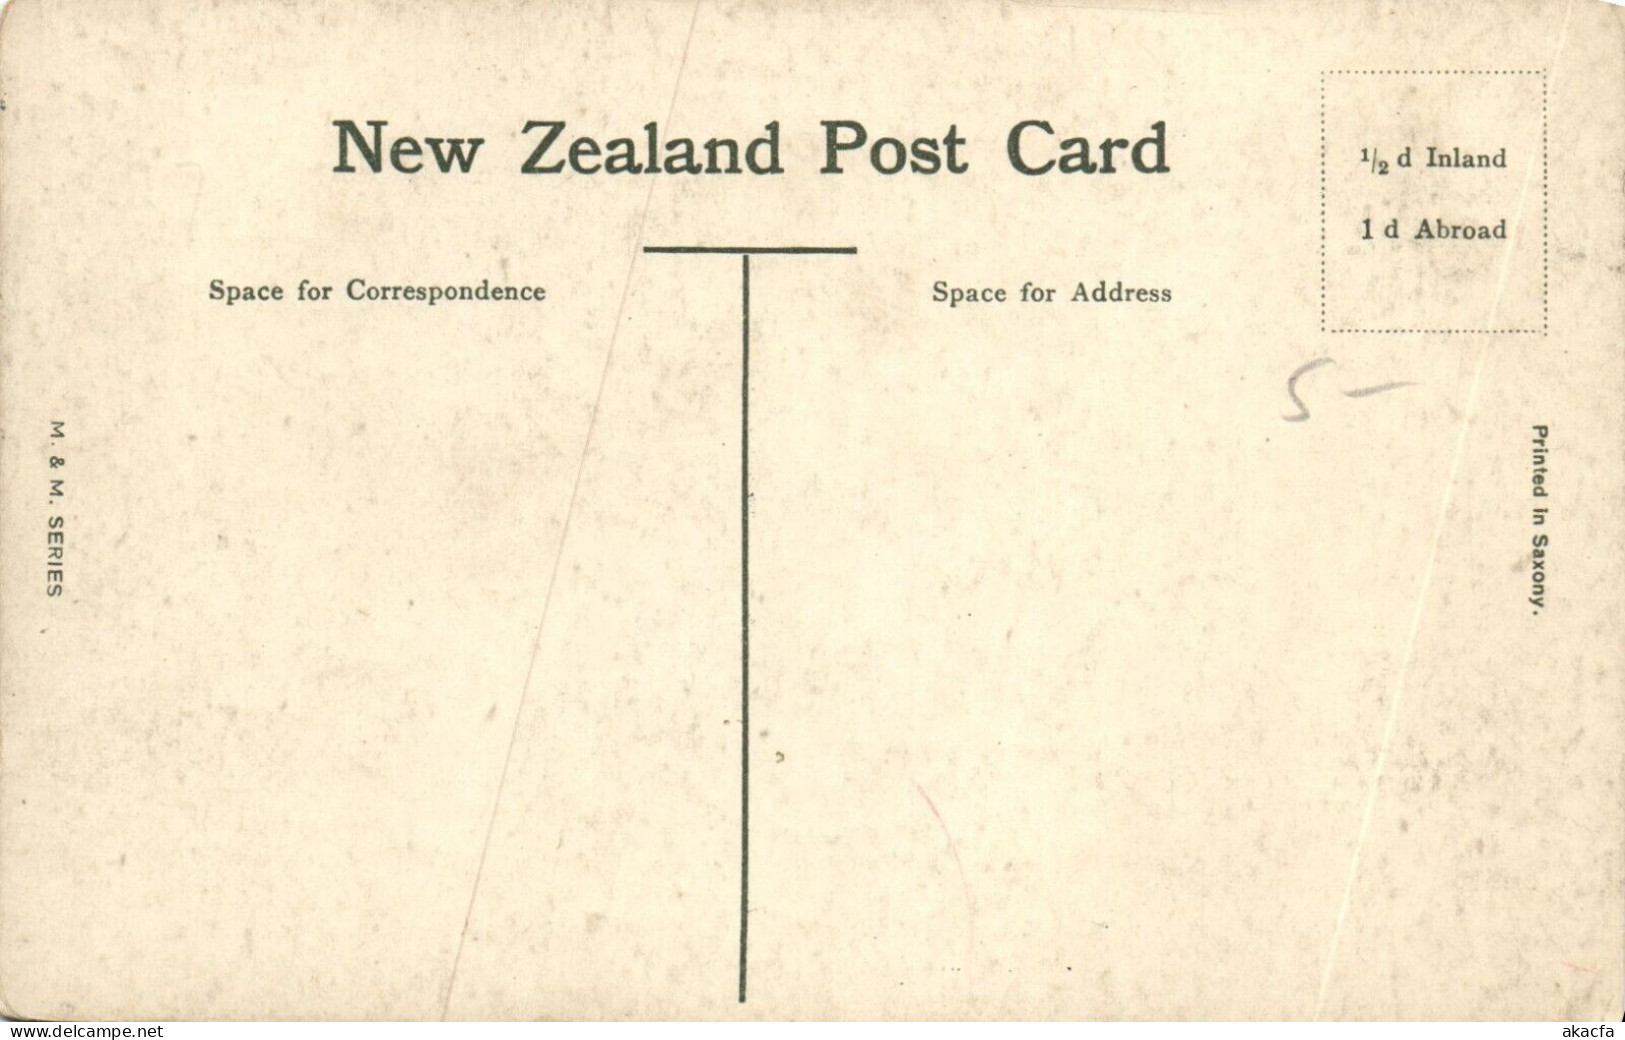 PC NEW ZEALAND ROTORUA A HONGI MAORI GREETING, VINTAGE POSTCARD (b53649) - New Zealand